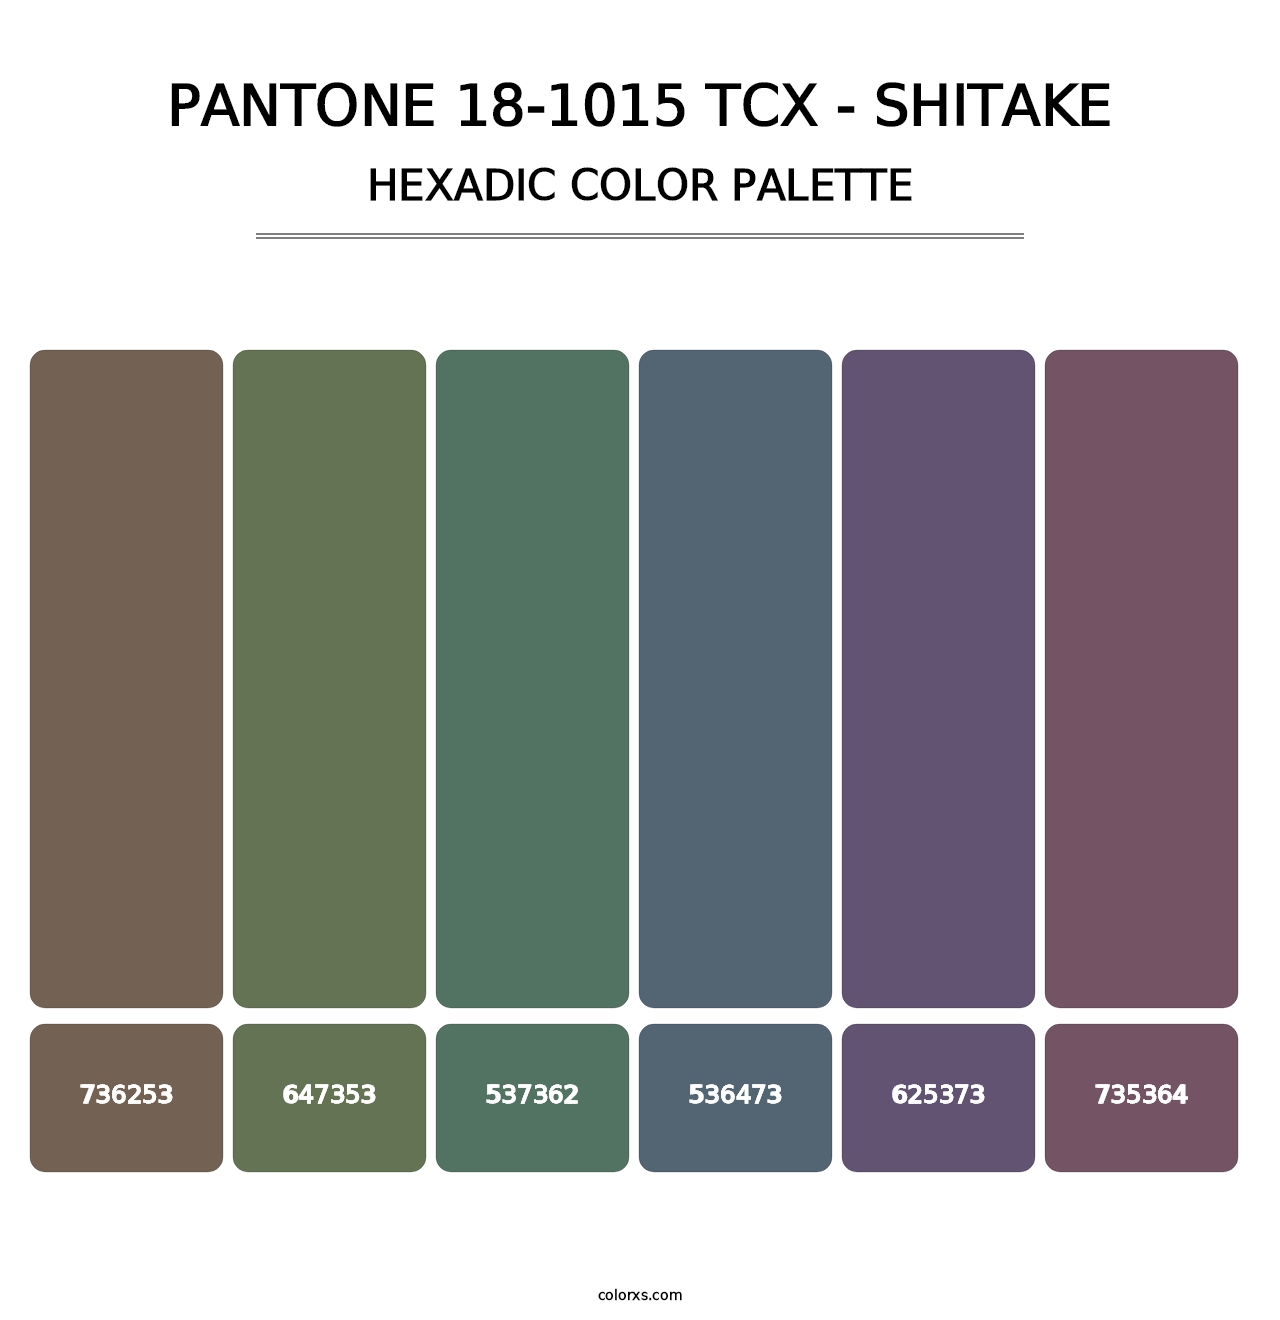 PANTONE 18-1015 TCX - Shitake - Hexadic Color Palette